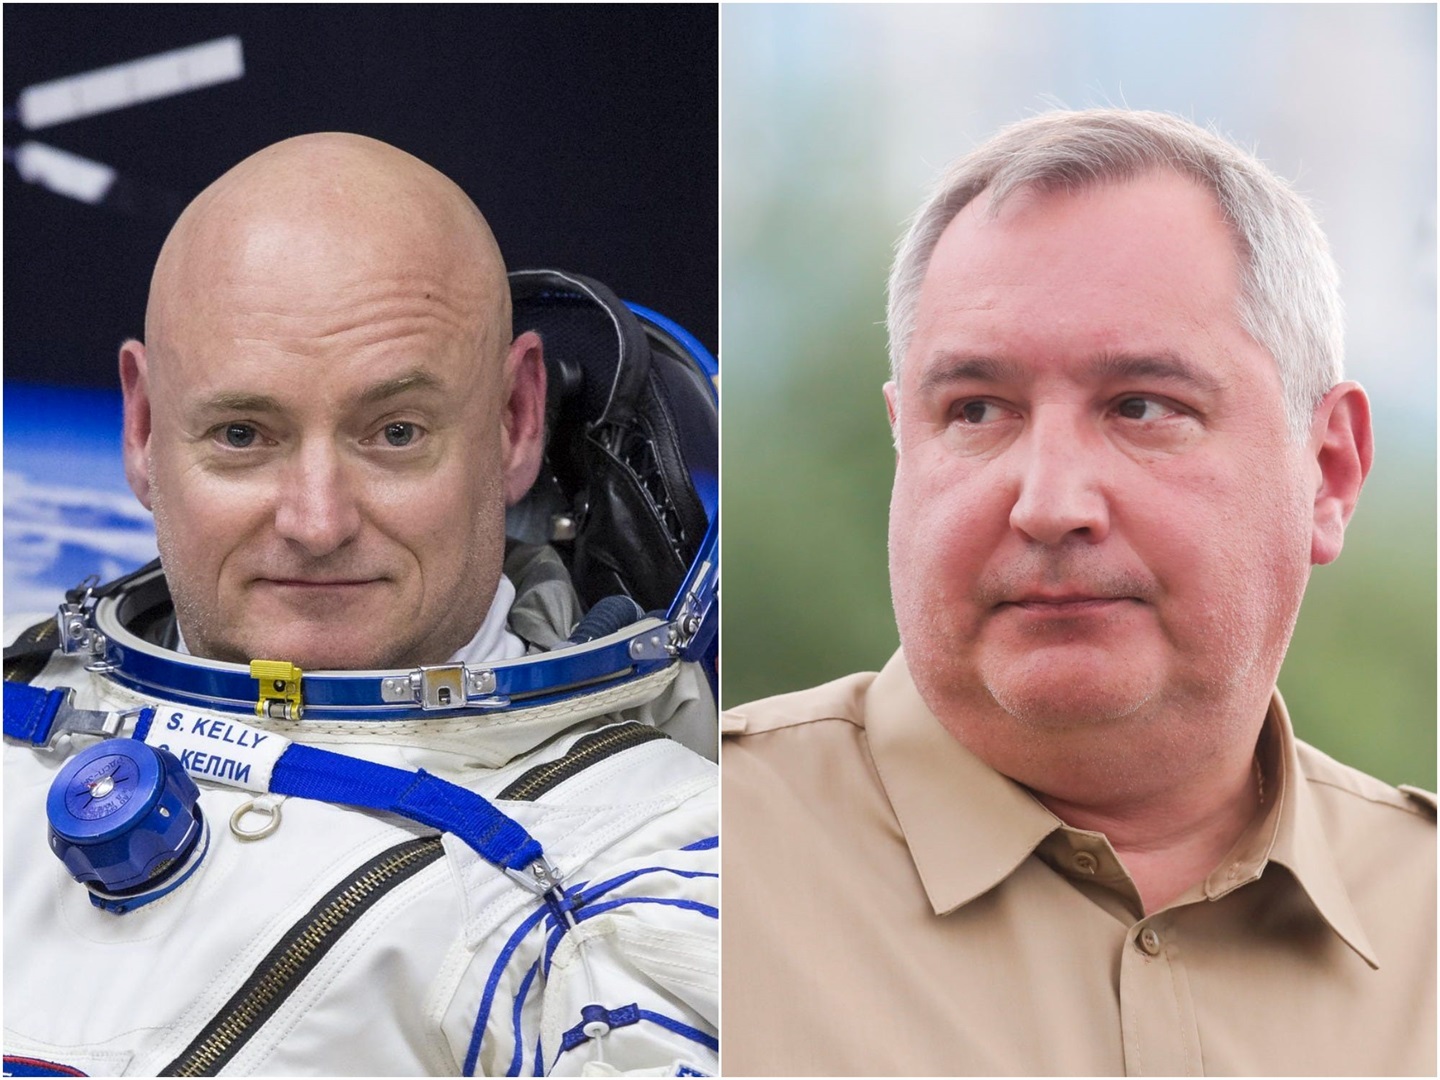 Former NASA astronaut Scott Kelly (left) and Roscosmos Director General Dmitry Rogozin (right) traded insults on Twitter. NASA/Bill Ingalls; Maxim Shemetov/Reuters